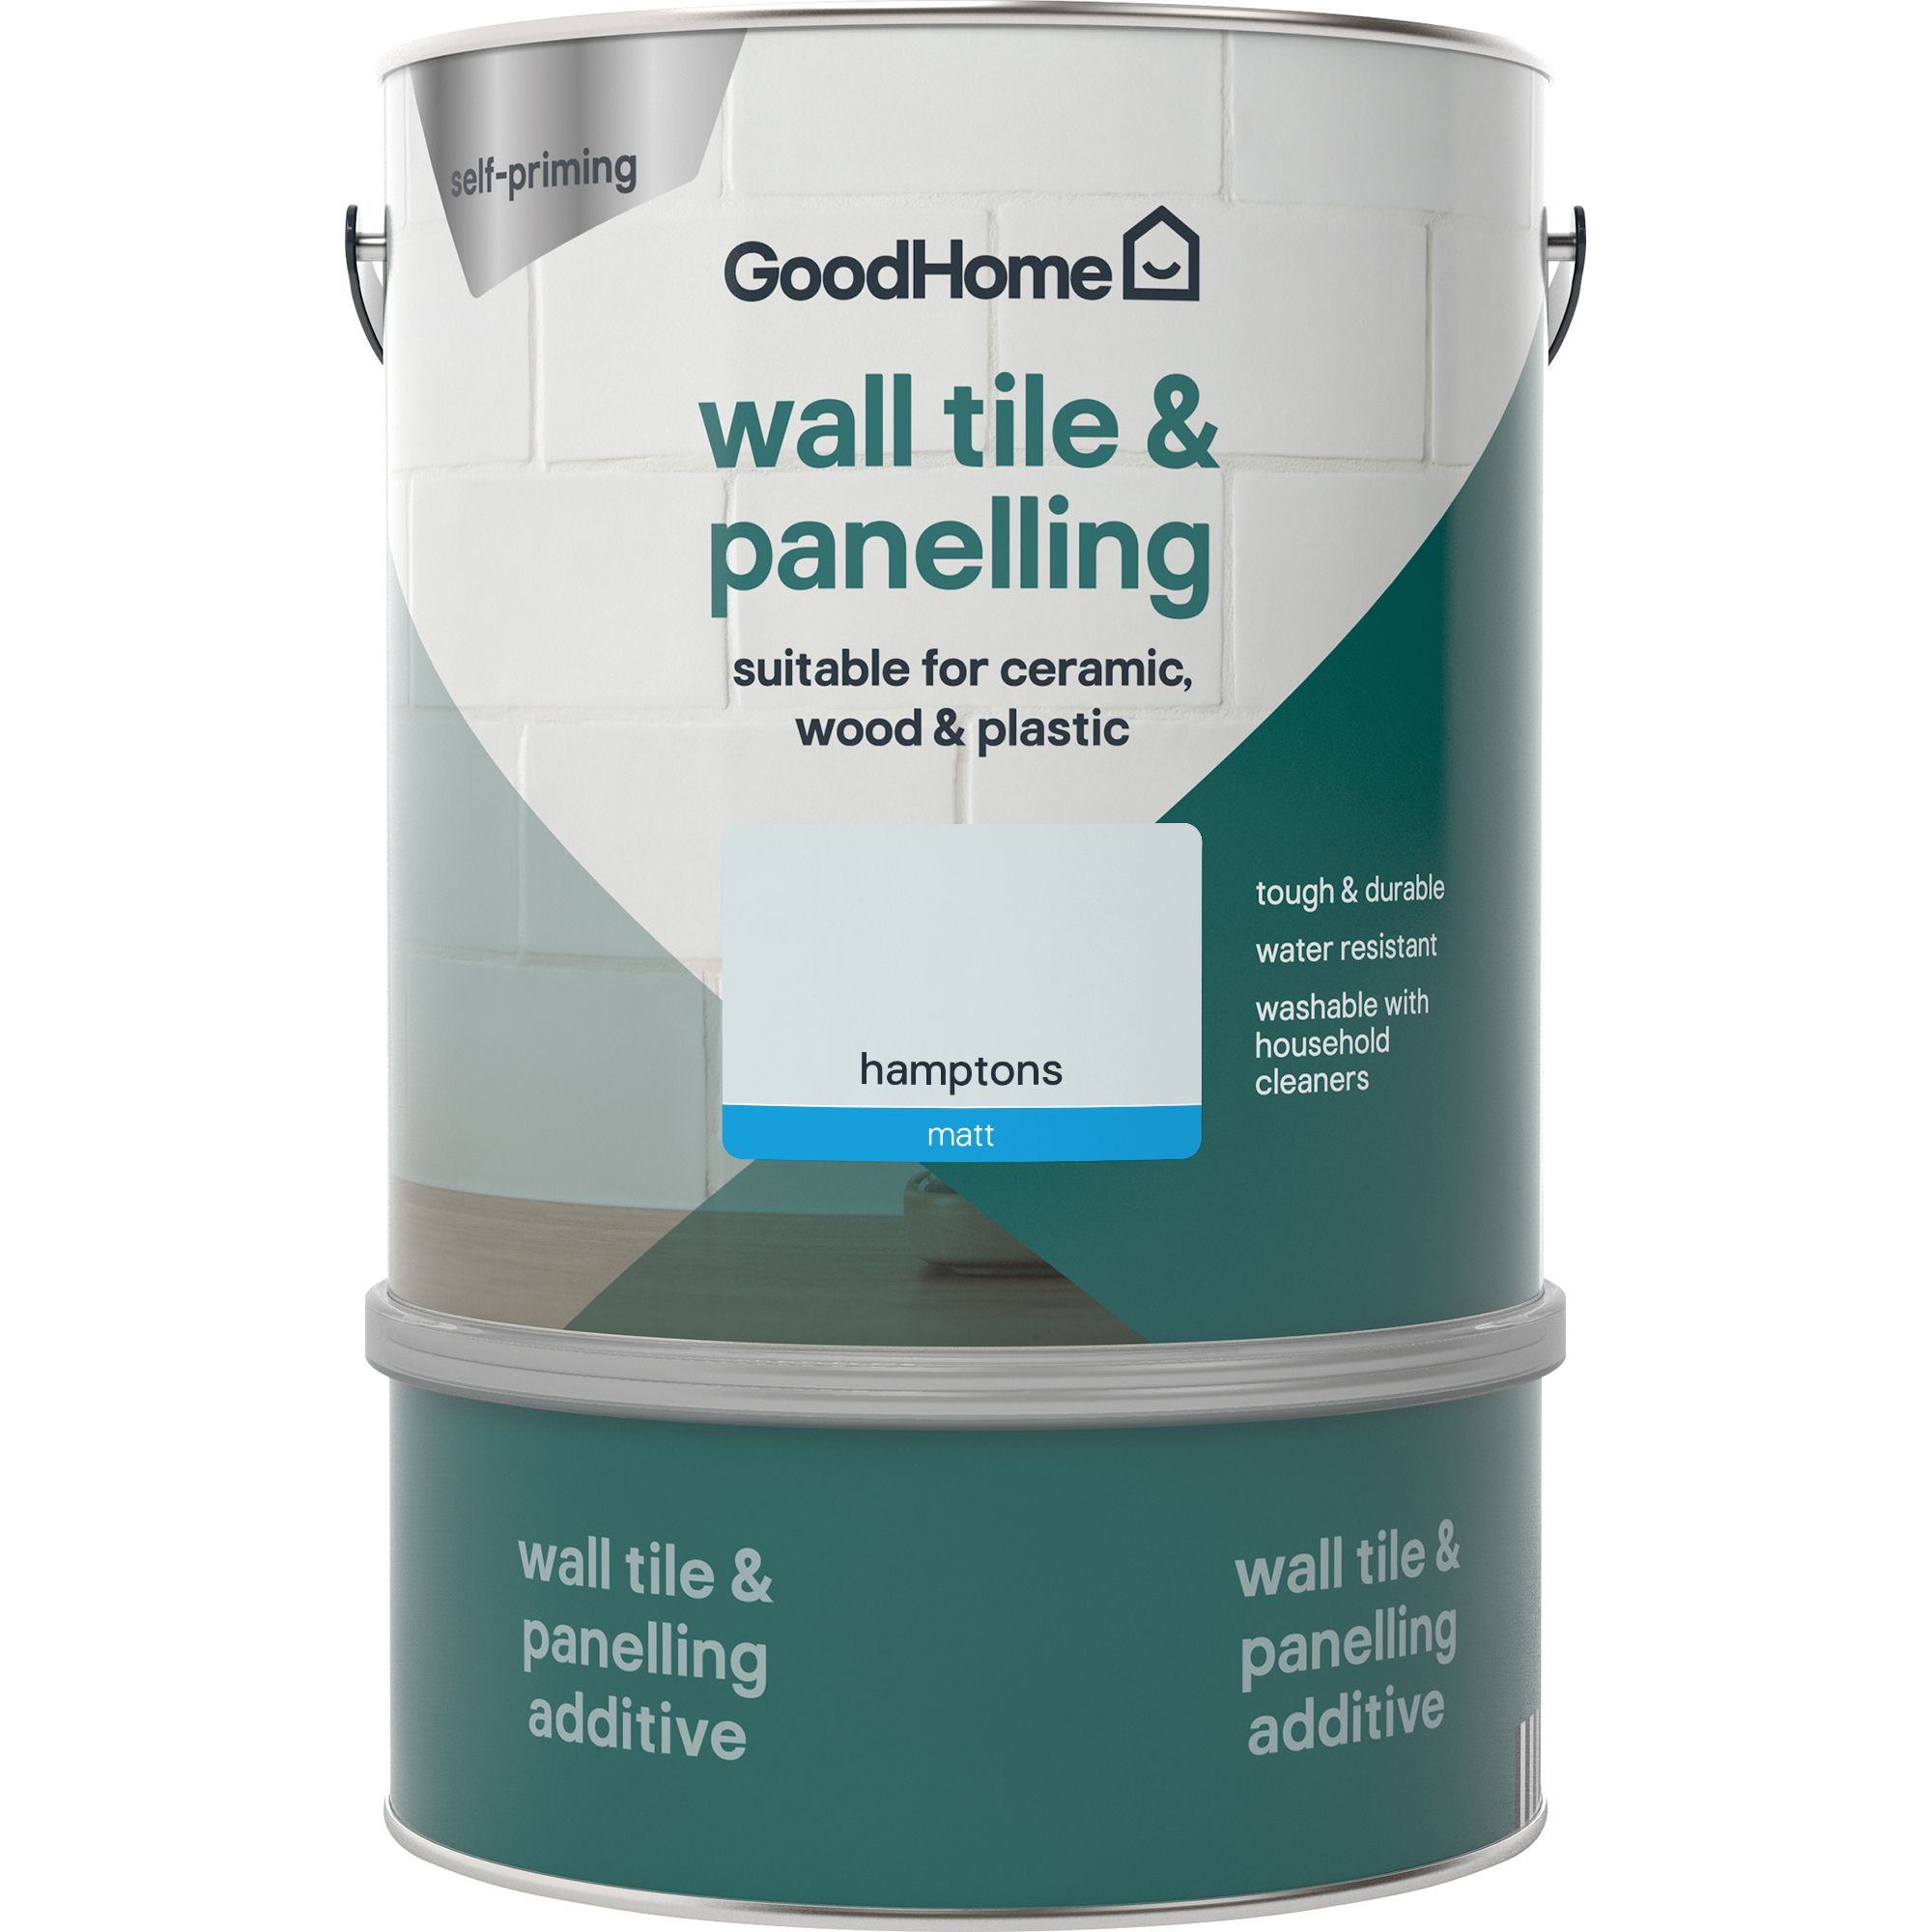 GoodHome Renovation Hamptons Matt Wall tile & panelling paint, 2L